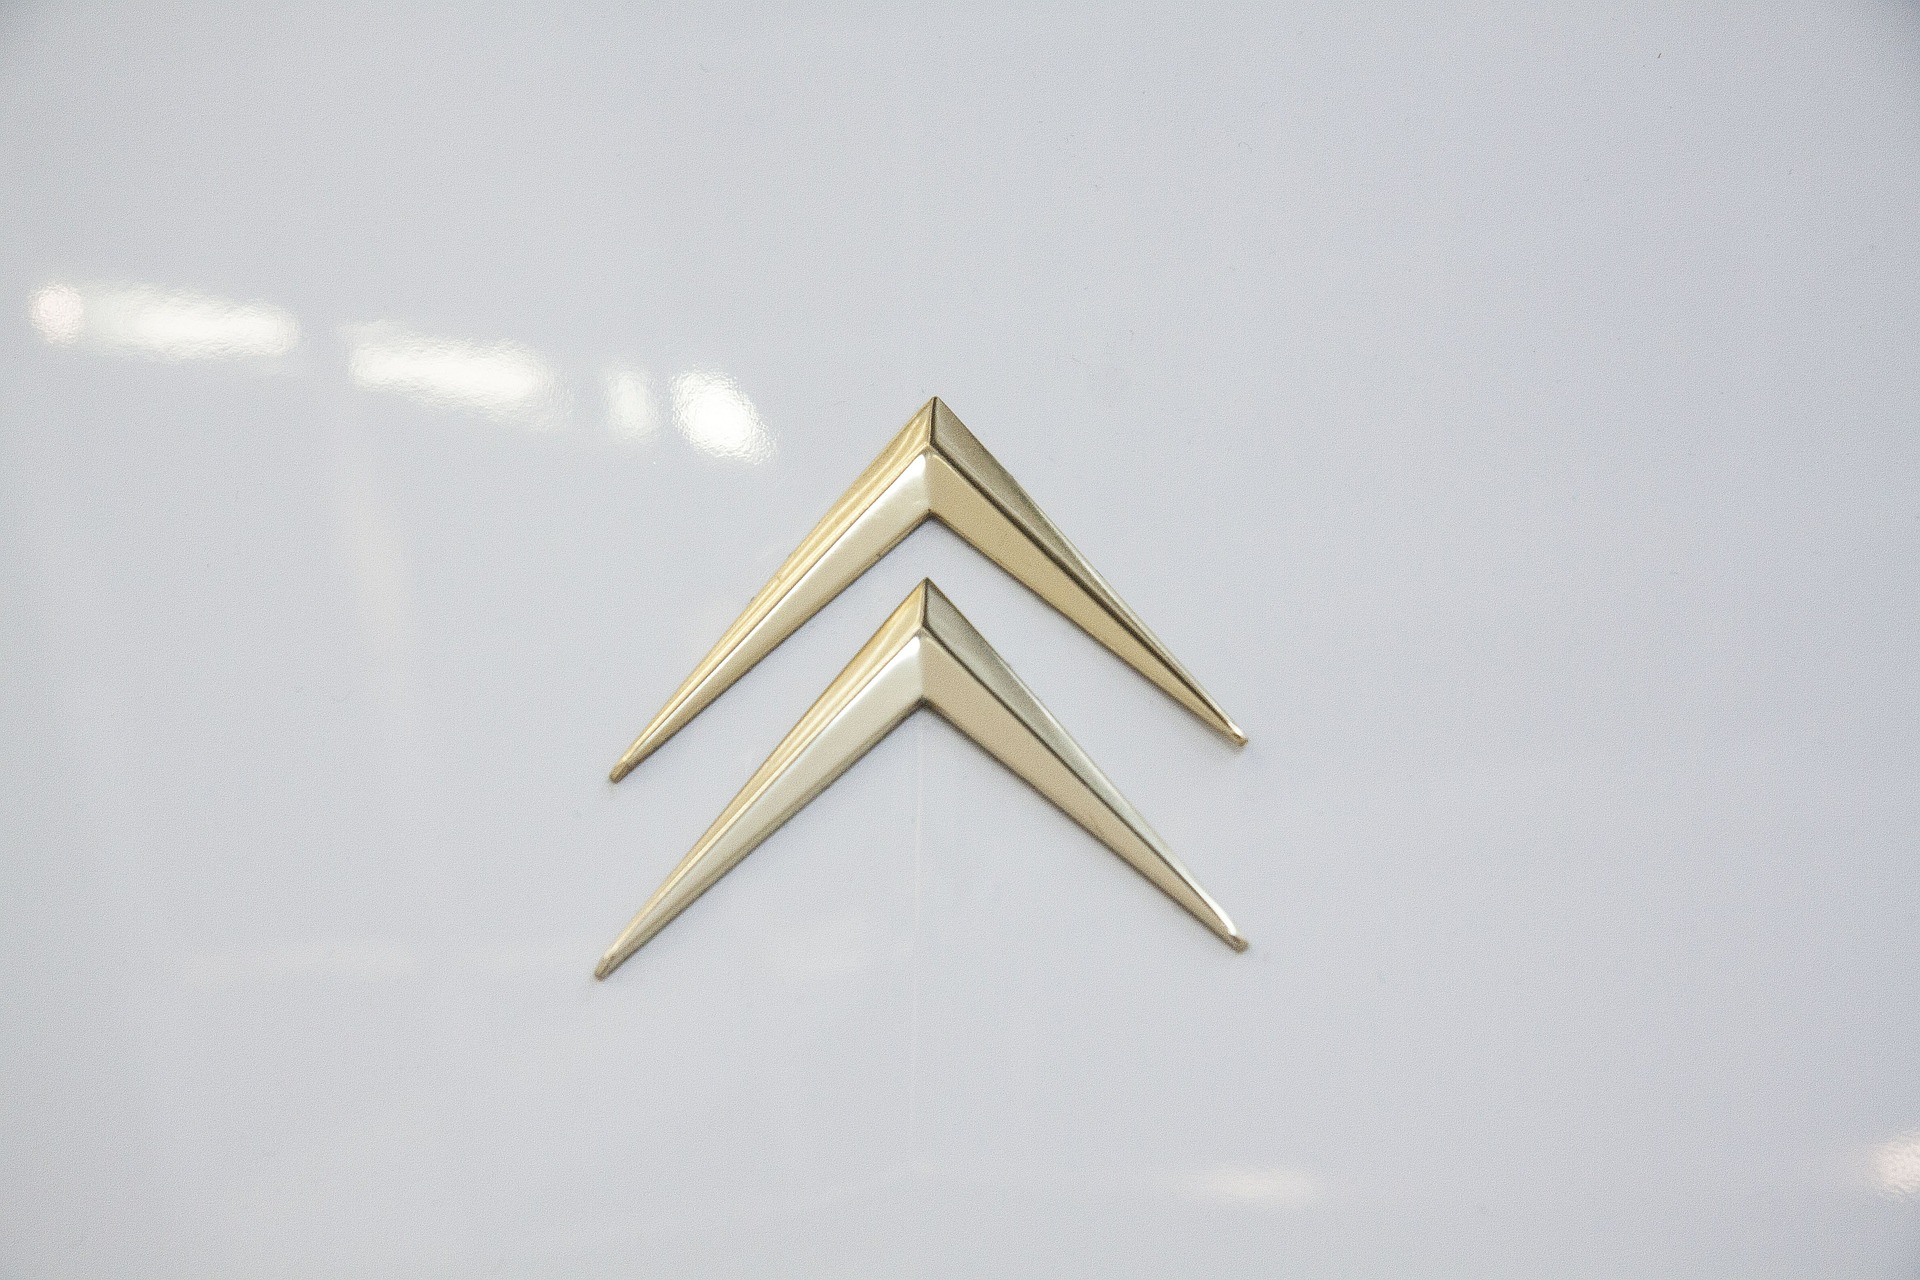 Qué significa el legendario logo de Citroën? - Blog - Desguaces La Torre